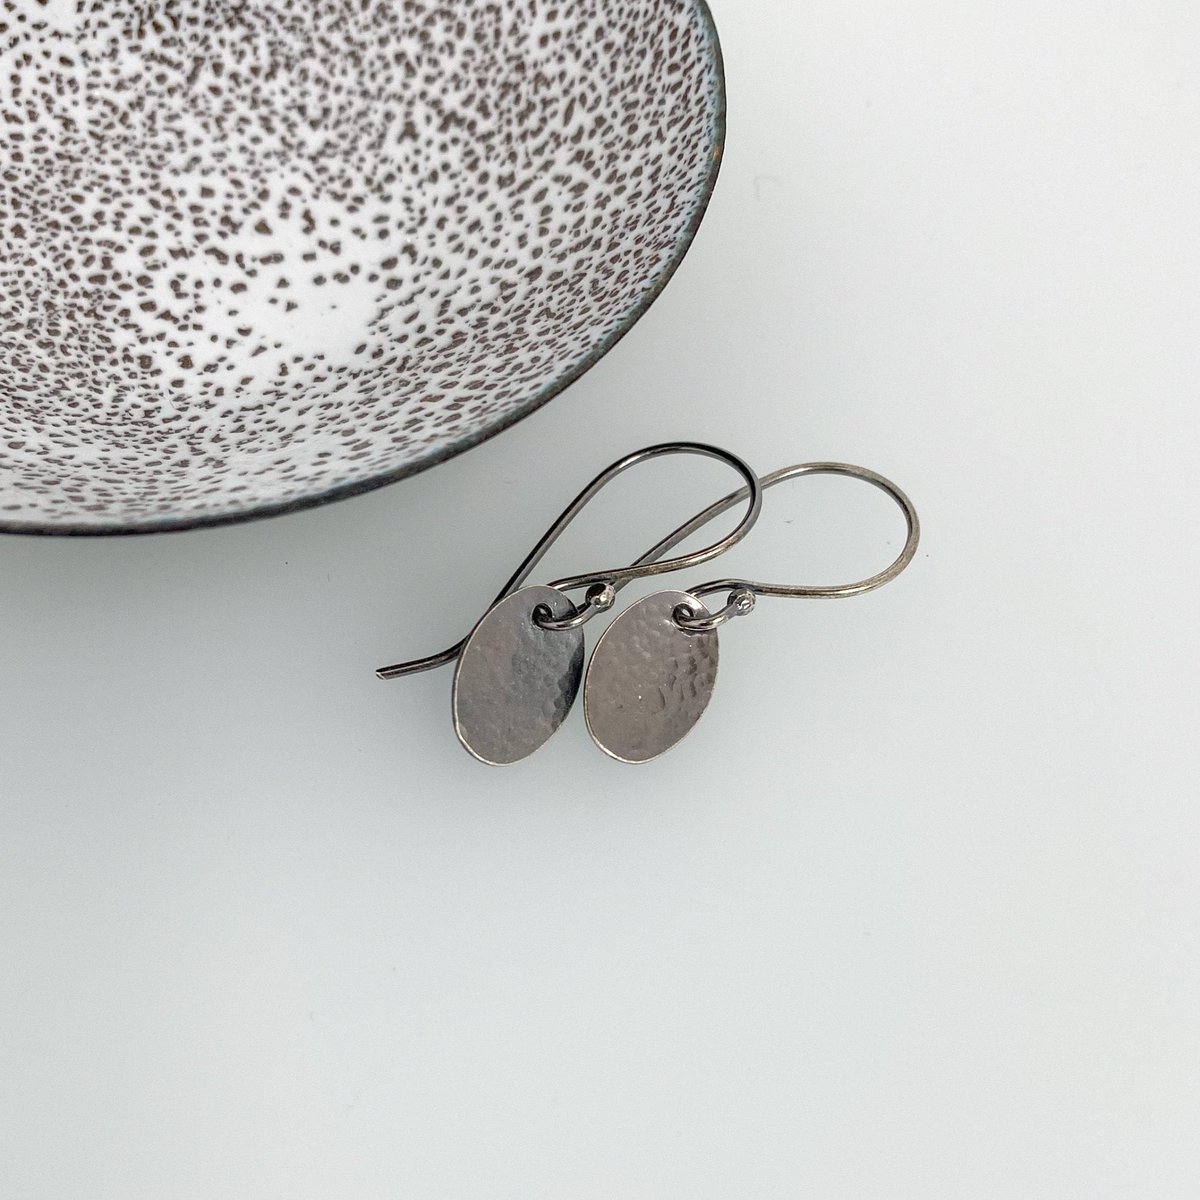 Oxidised Oval Drop Earrings tuppu.net/3c5cb7ce #HandmadeHour ##UKGiftHour #inbizhour #shopsmall #MHHSBD #UKHashtags #bizbubble #giftideas #Earrings